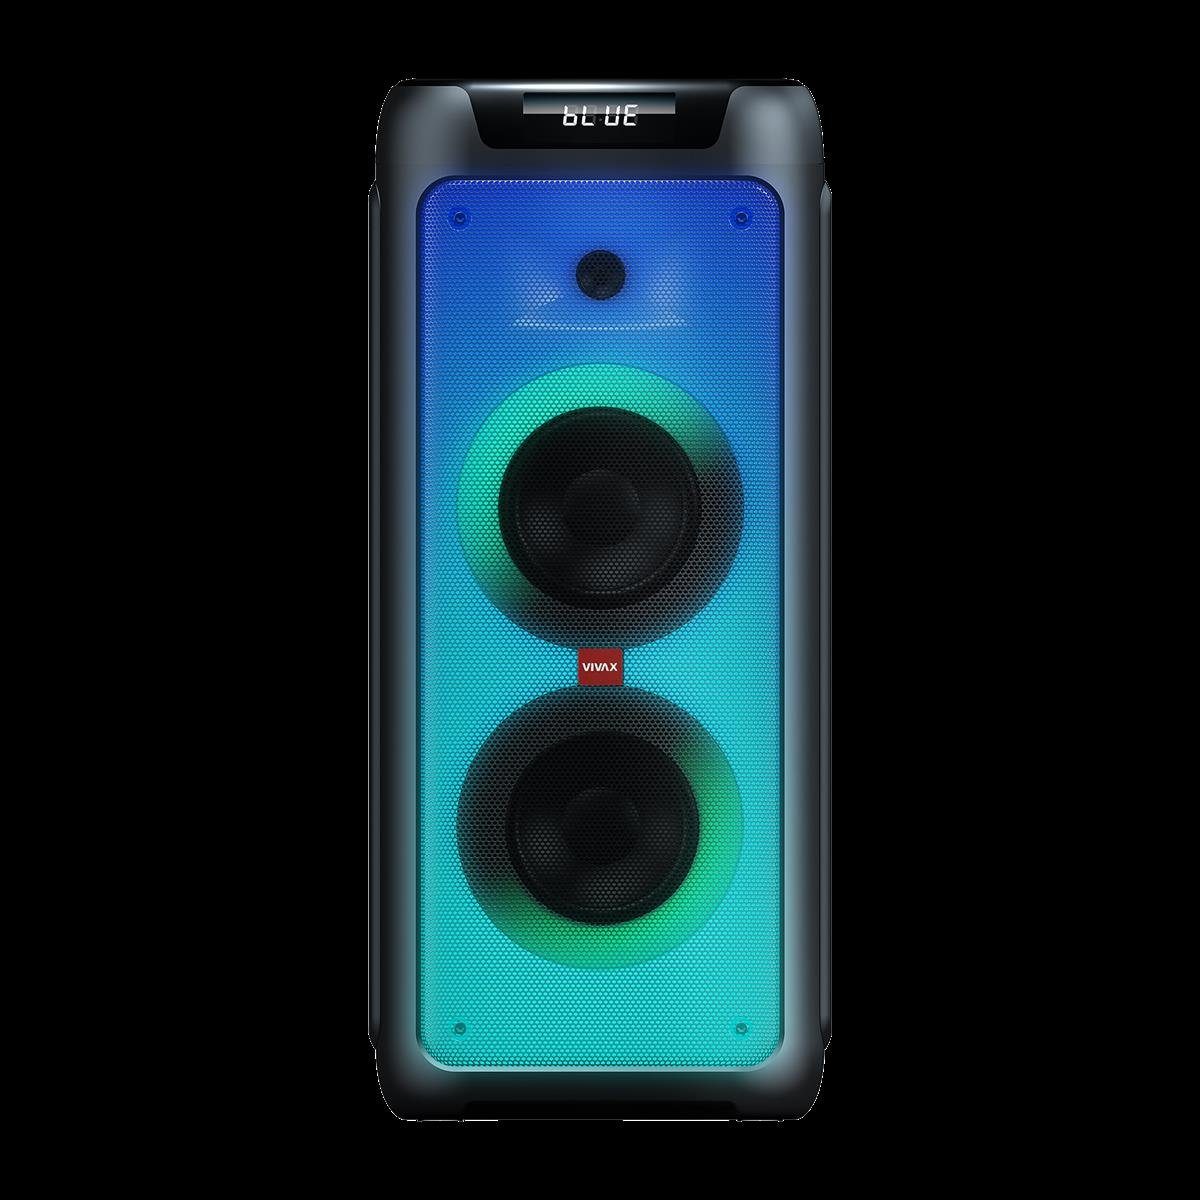 Vivax 50 Watt Bluetooth-Karaoke-Lautsprecher Bluetooth-Lautsprecher W) BS-500 50 (Bluetooth